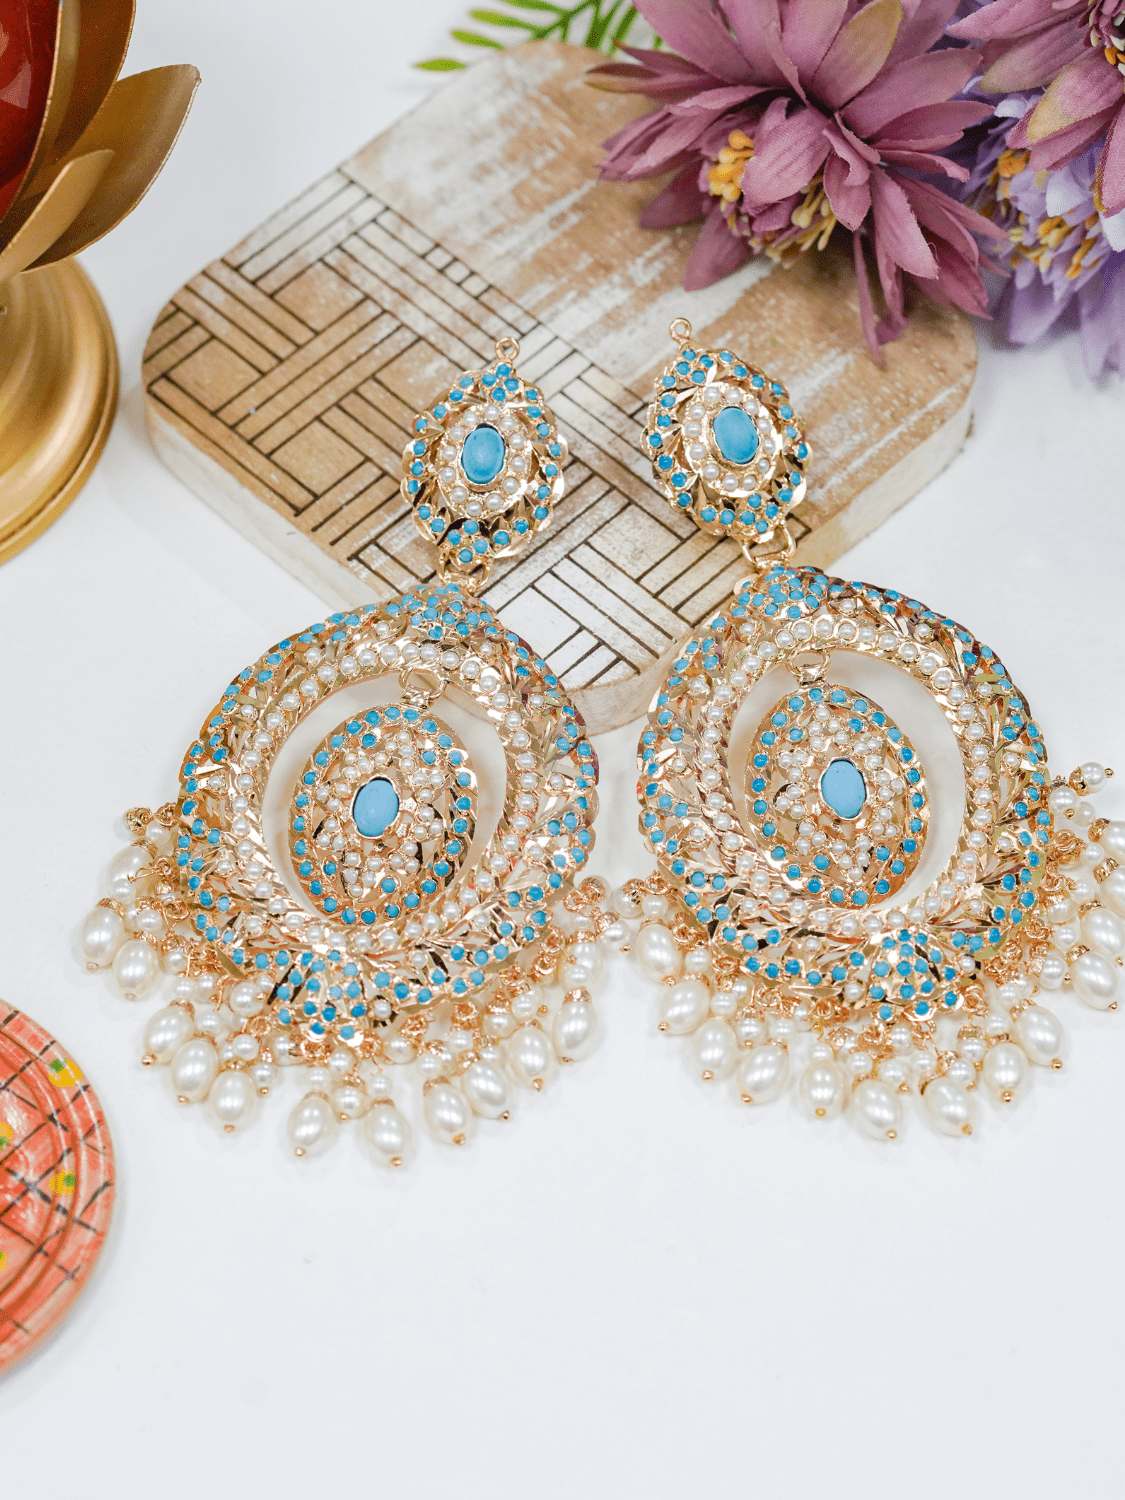 Turquoise & white pearls oversized jadau chaandbali earrings